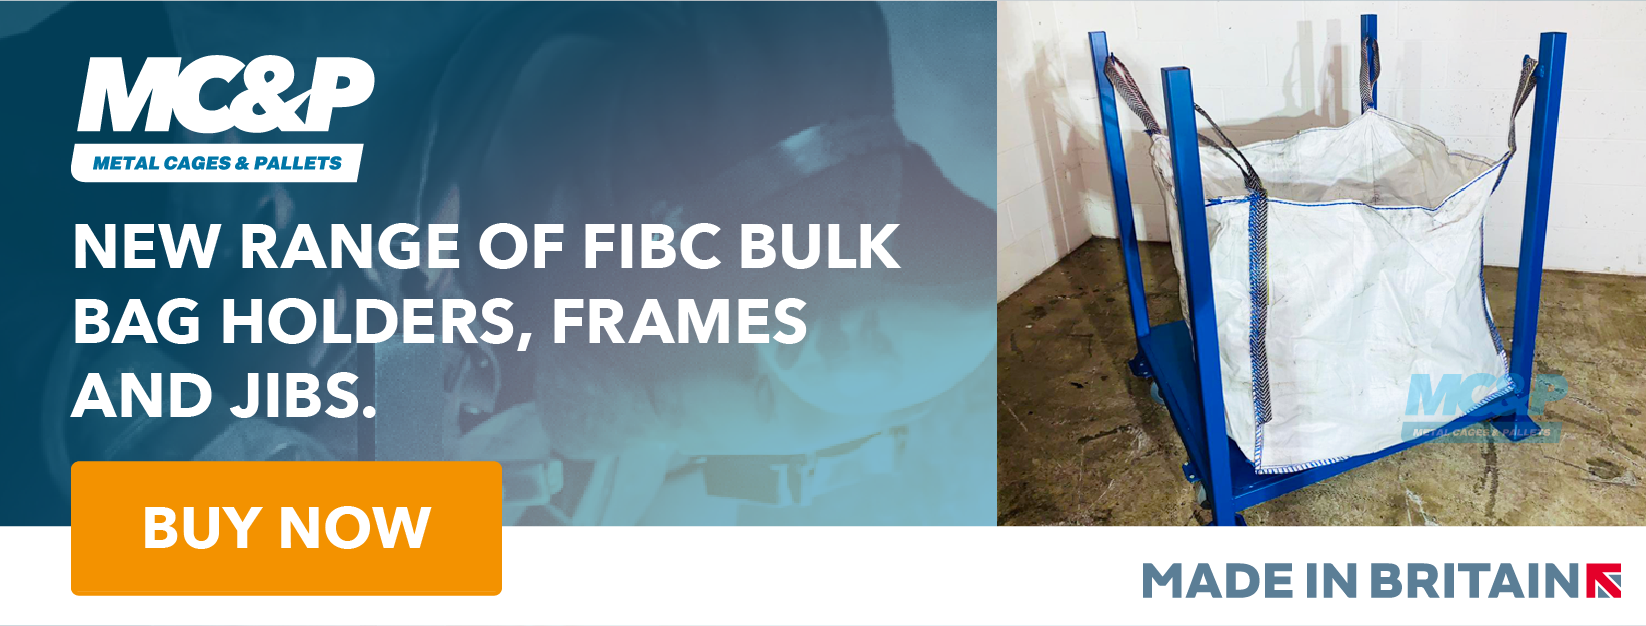 FIBC Bag Holders, Frames and Jibs - Buy Now